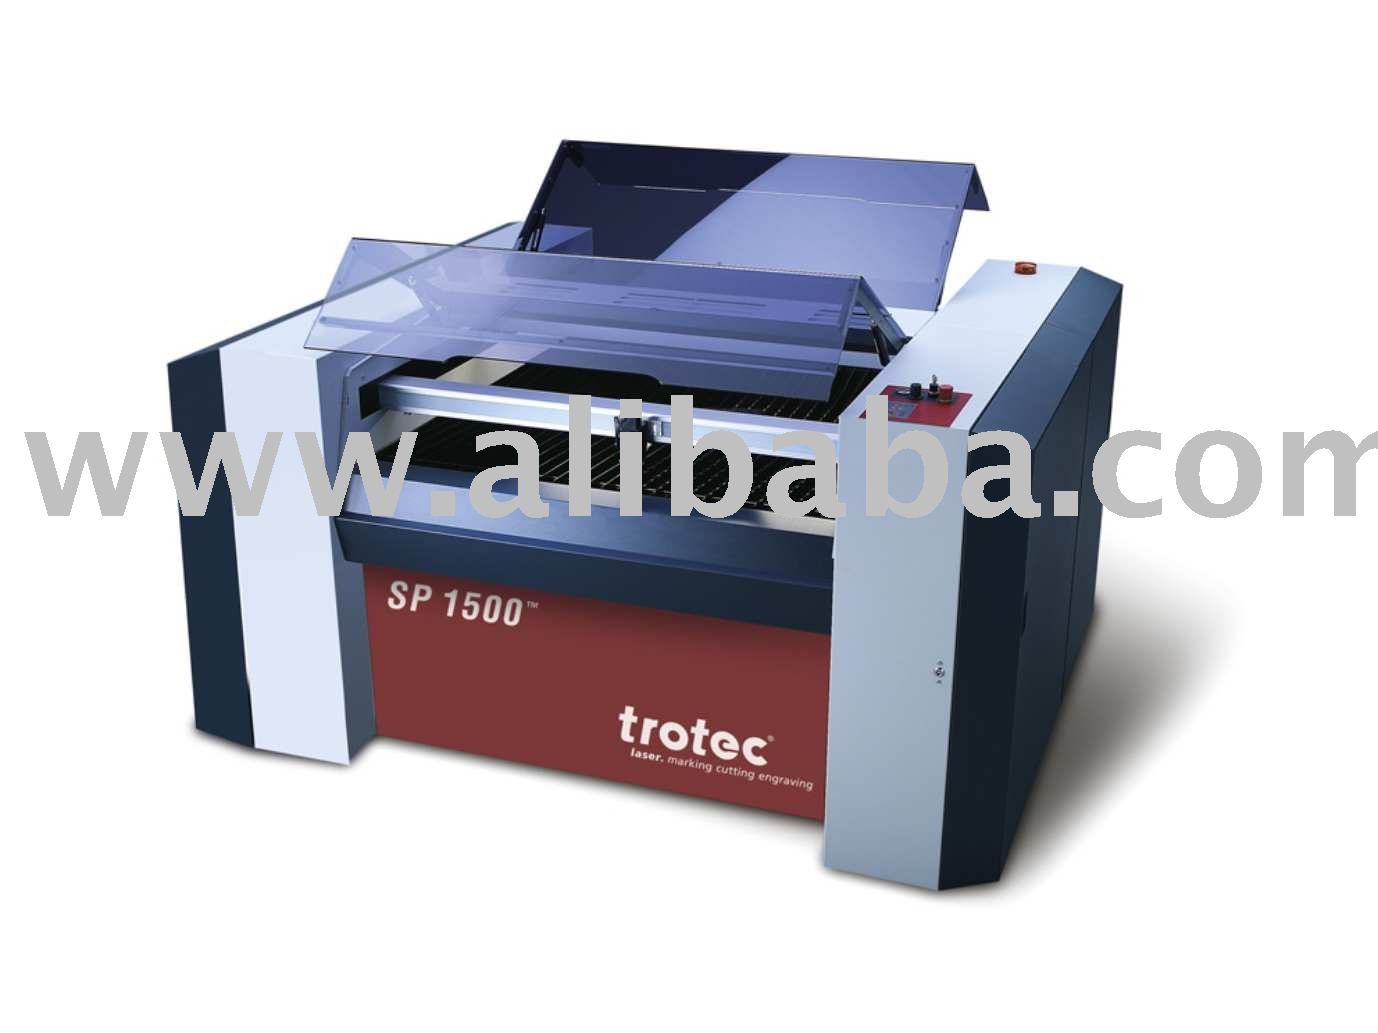 Trotec Speedy 1500 Laser Machine - Buy Laser Engraving Cutting Marking Machines Product on ...